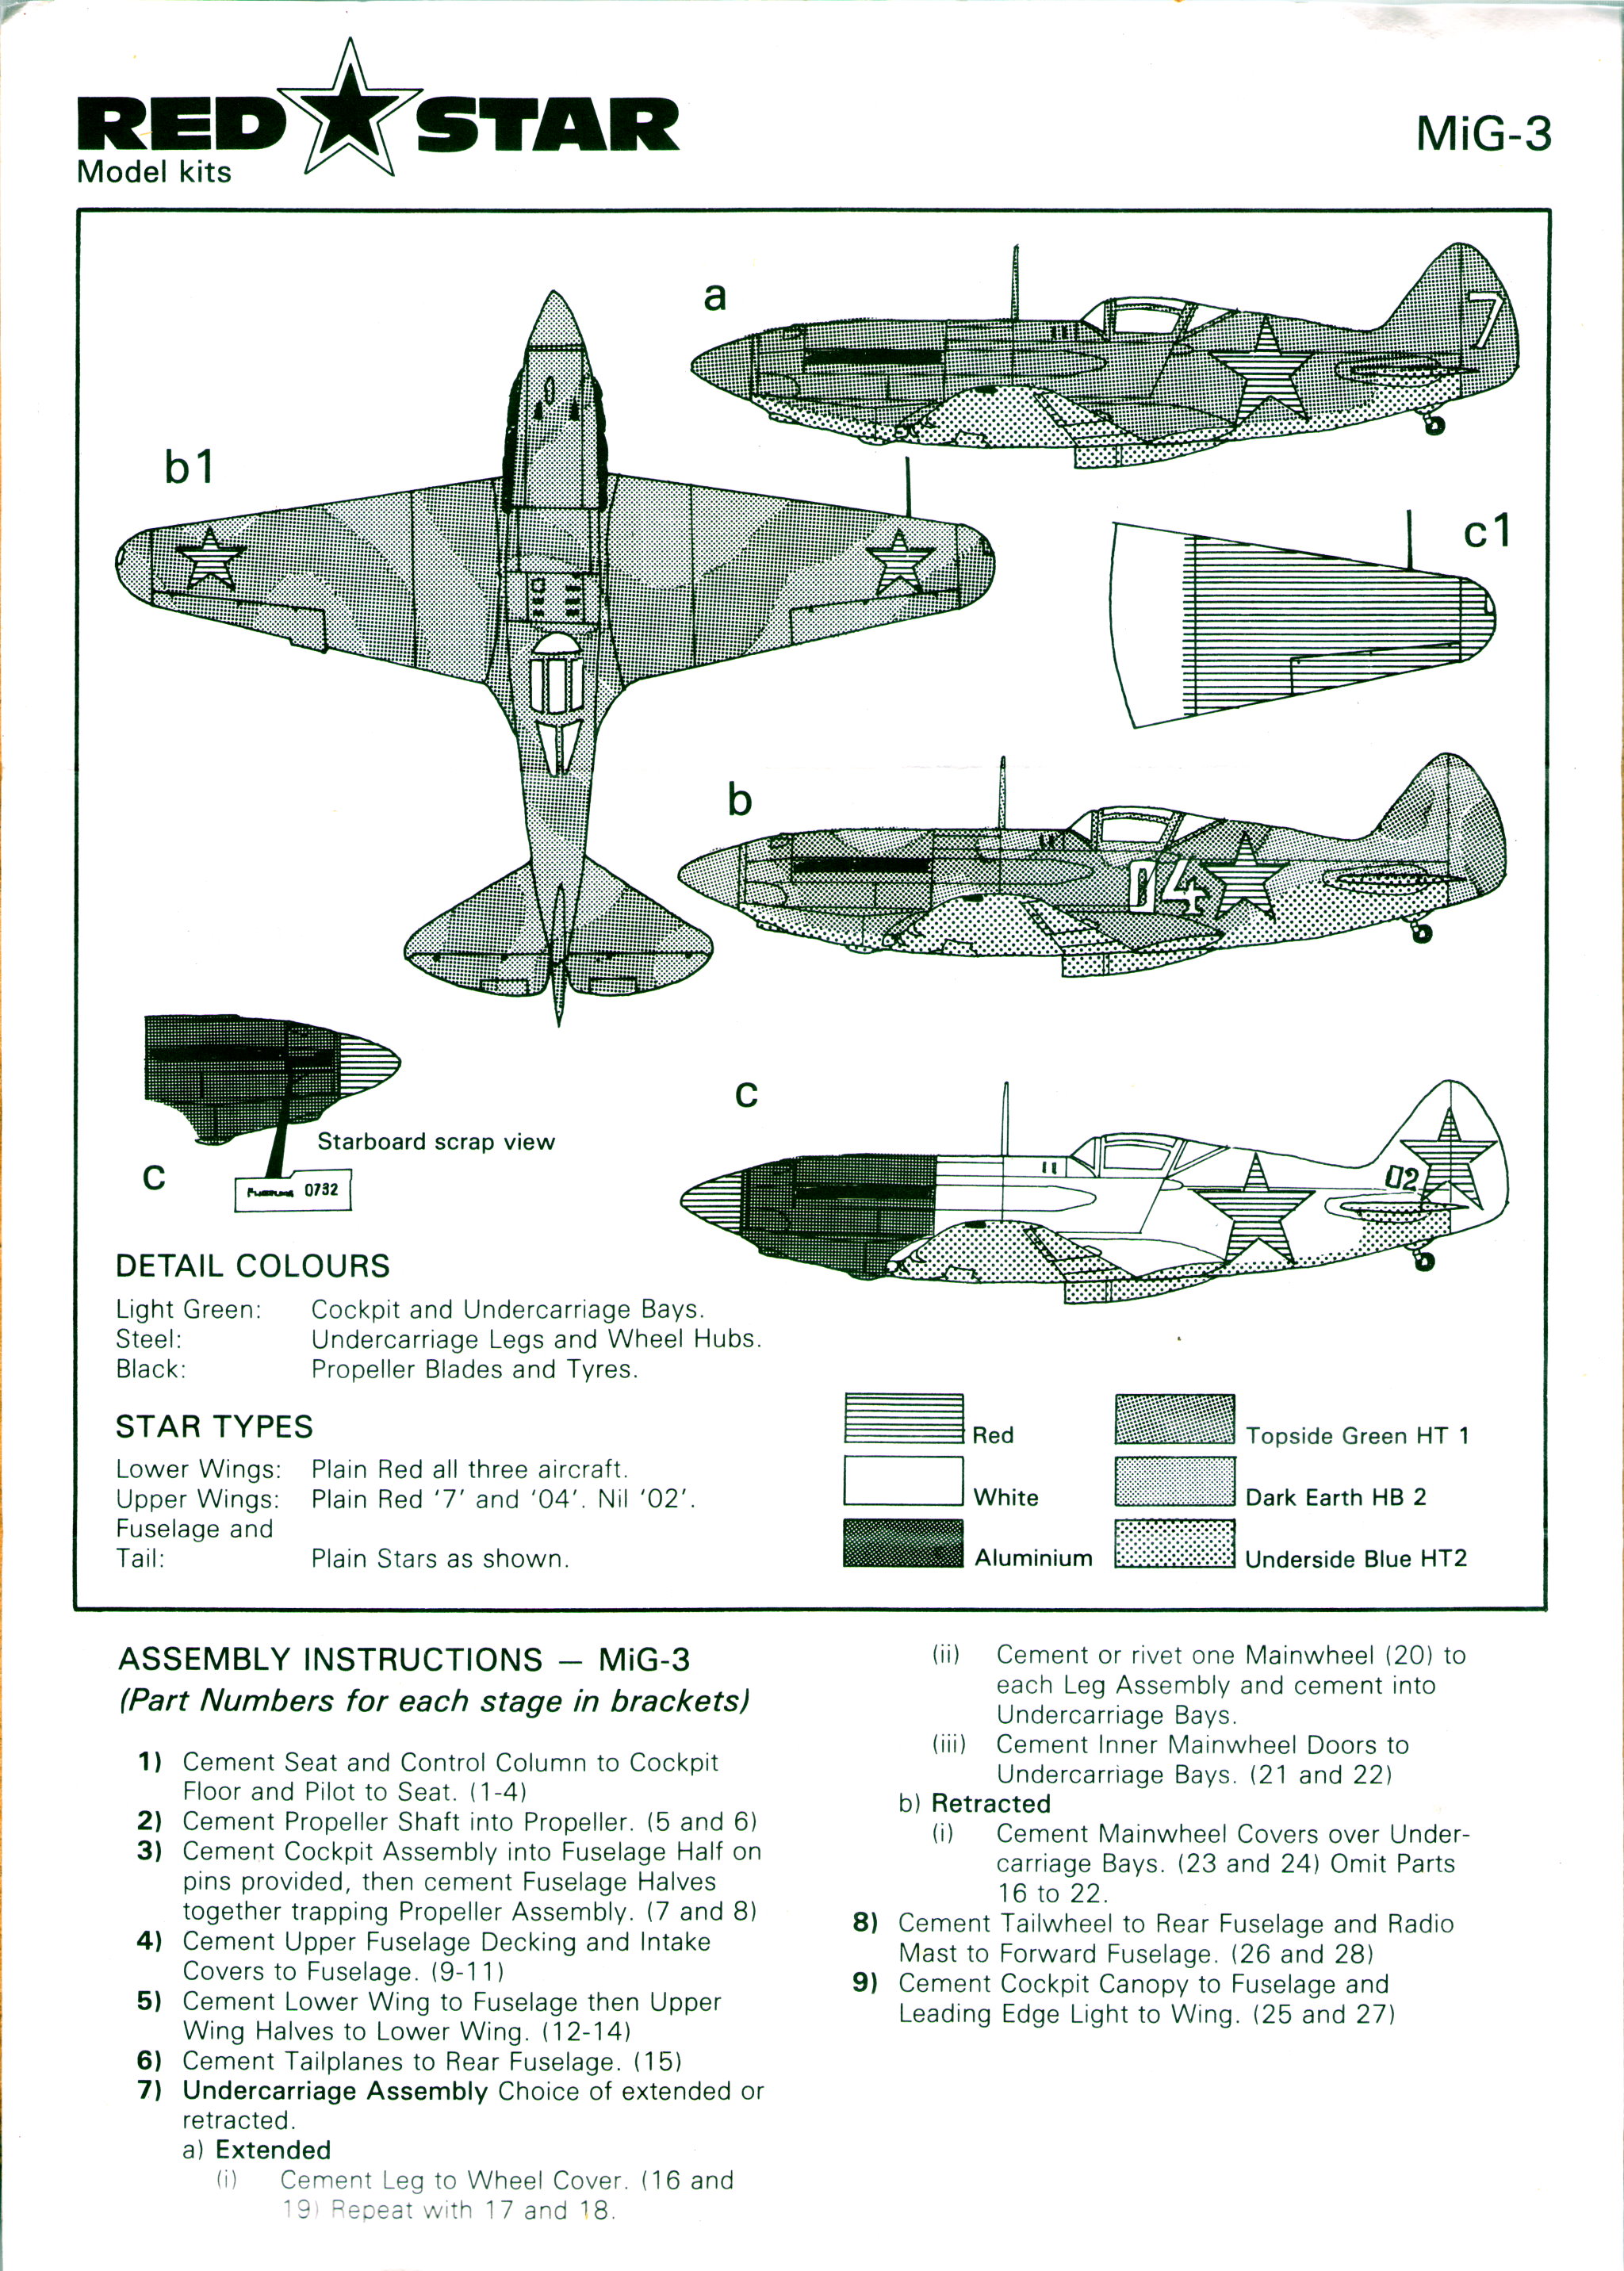 Инструкция по сборке для F311 Yak-3, набор из четырёх моделей Red Star RS1/4 Lavochkin LaGG-3, Red Star Model Kits Ltd, 1983/4